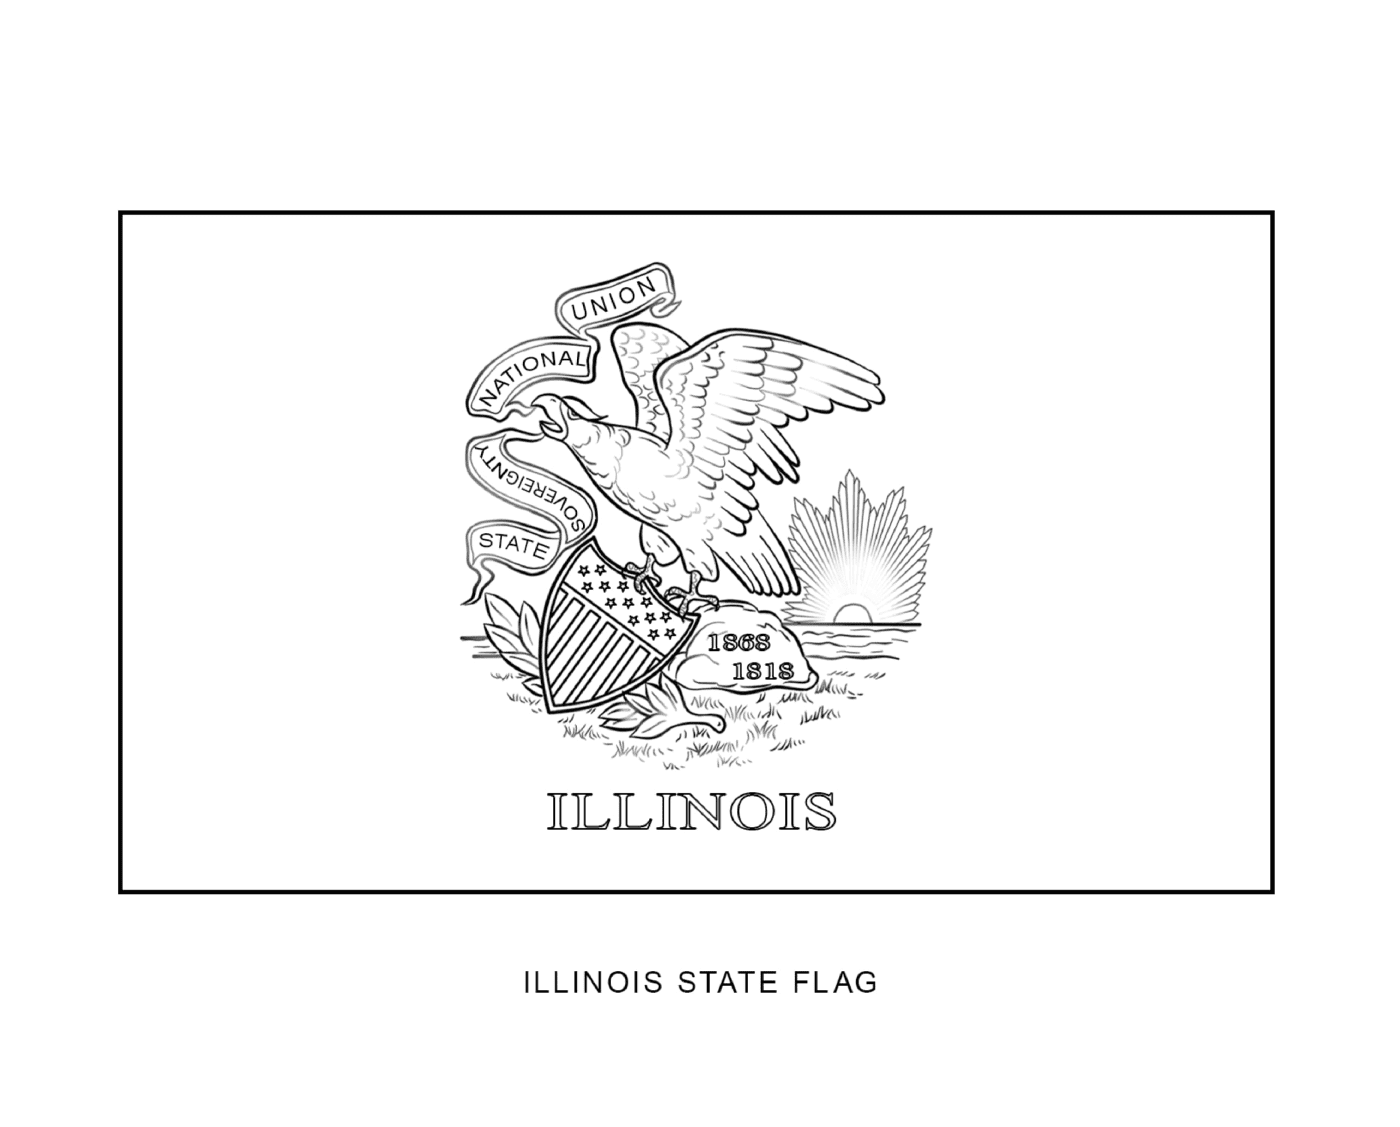  State of Illinois flag 